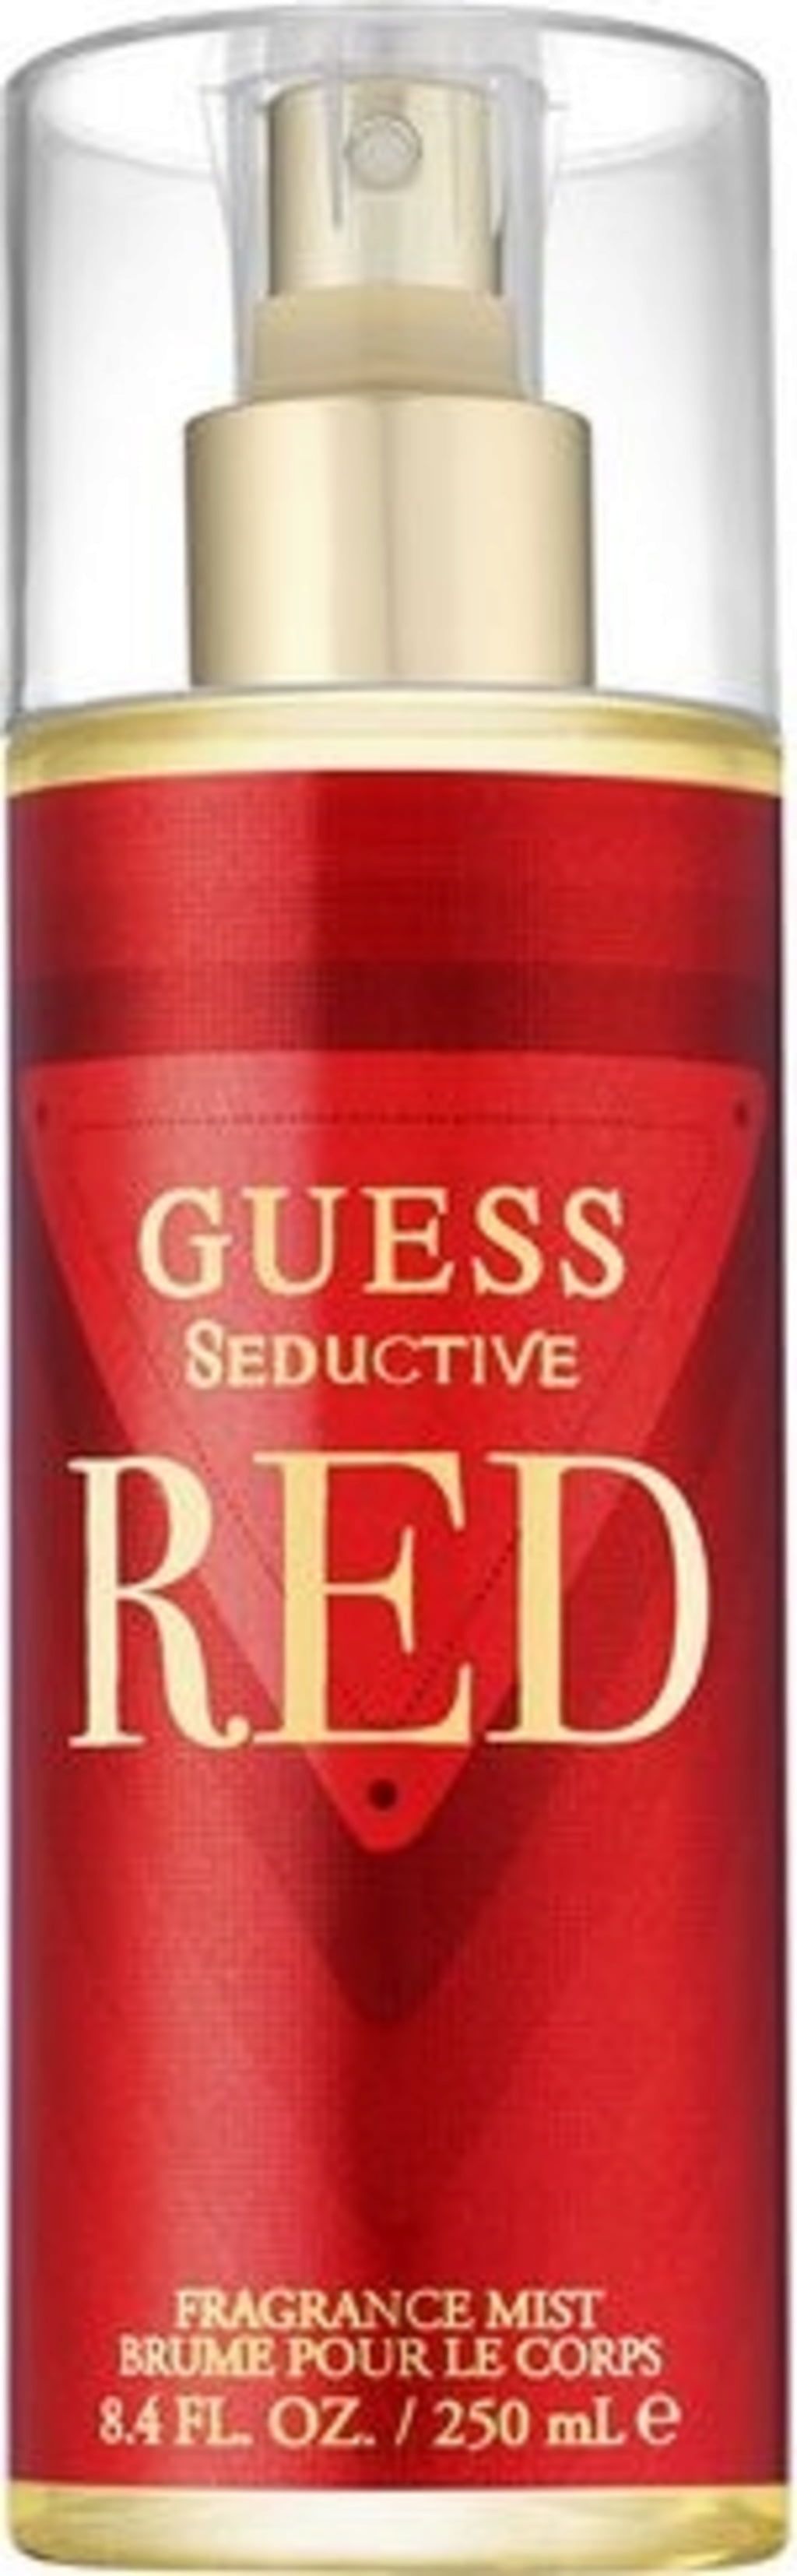 Guess Seductive Red for Women Body Mist, 250 ml - oh feliz International  Online Shop